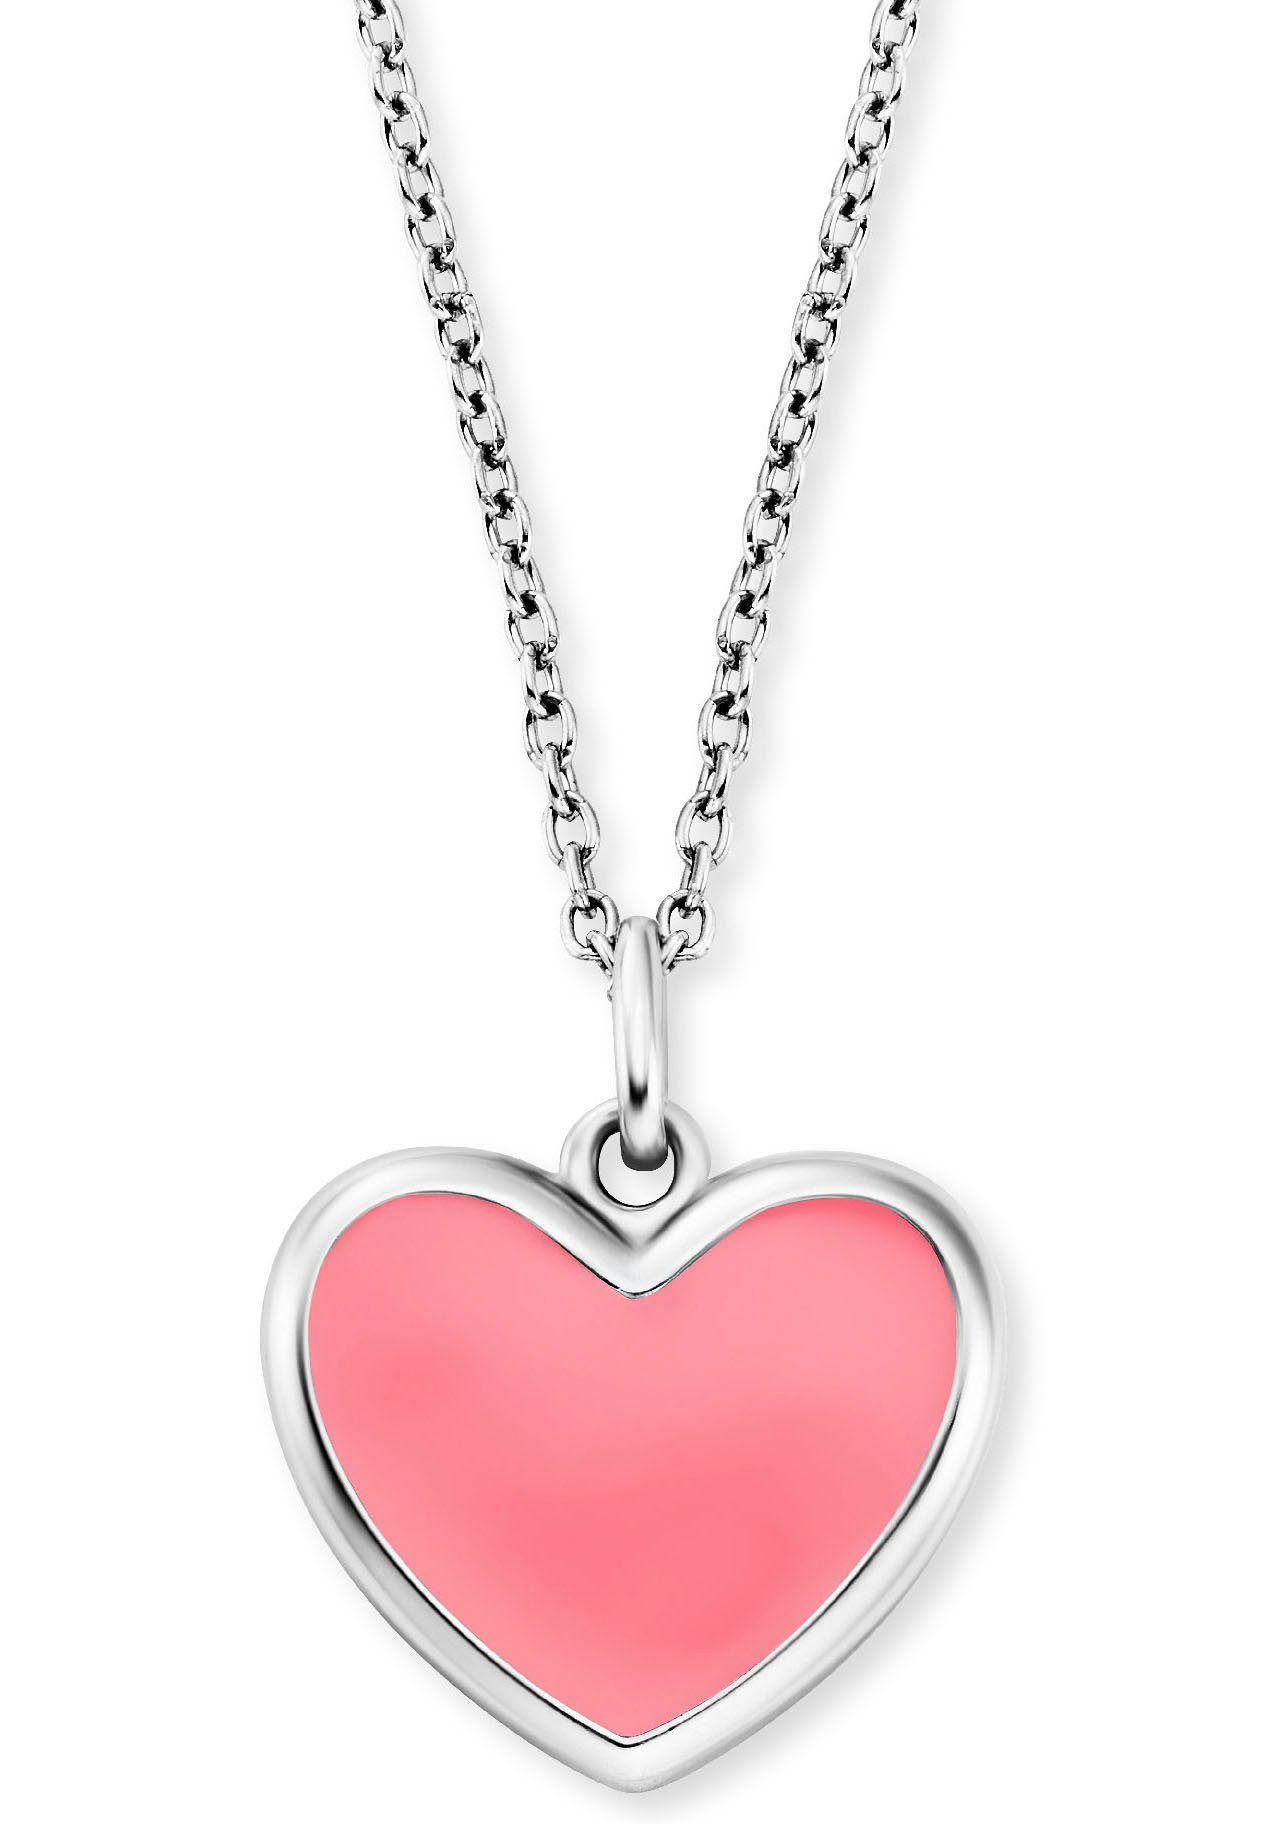 Herzengel Kette mit Anhänger Schmuck Geschenk, Little Heart, Herz, HEN-HEART-06, HEN-HEART-13, mit Emaille